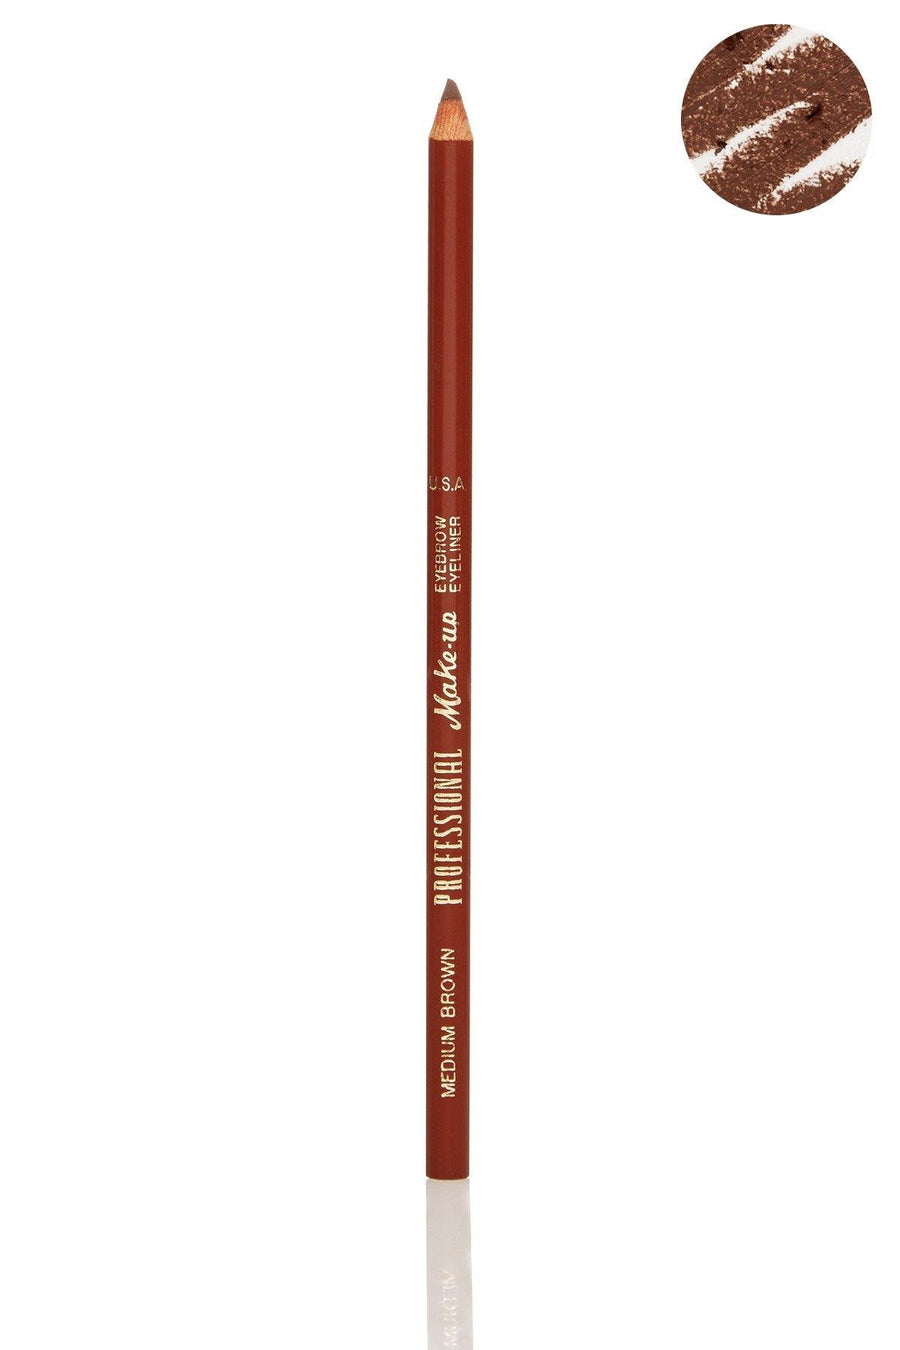 Medium Brown Eyebrow Eyeliner Pencil - Blend Mineral Cosmetics